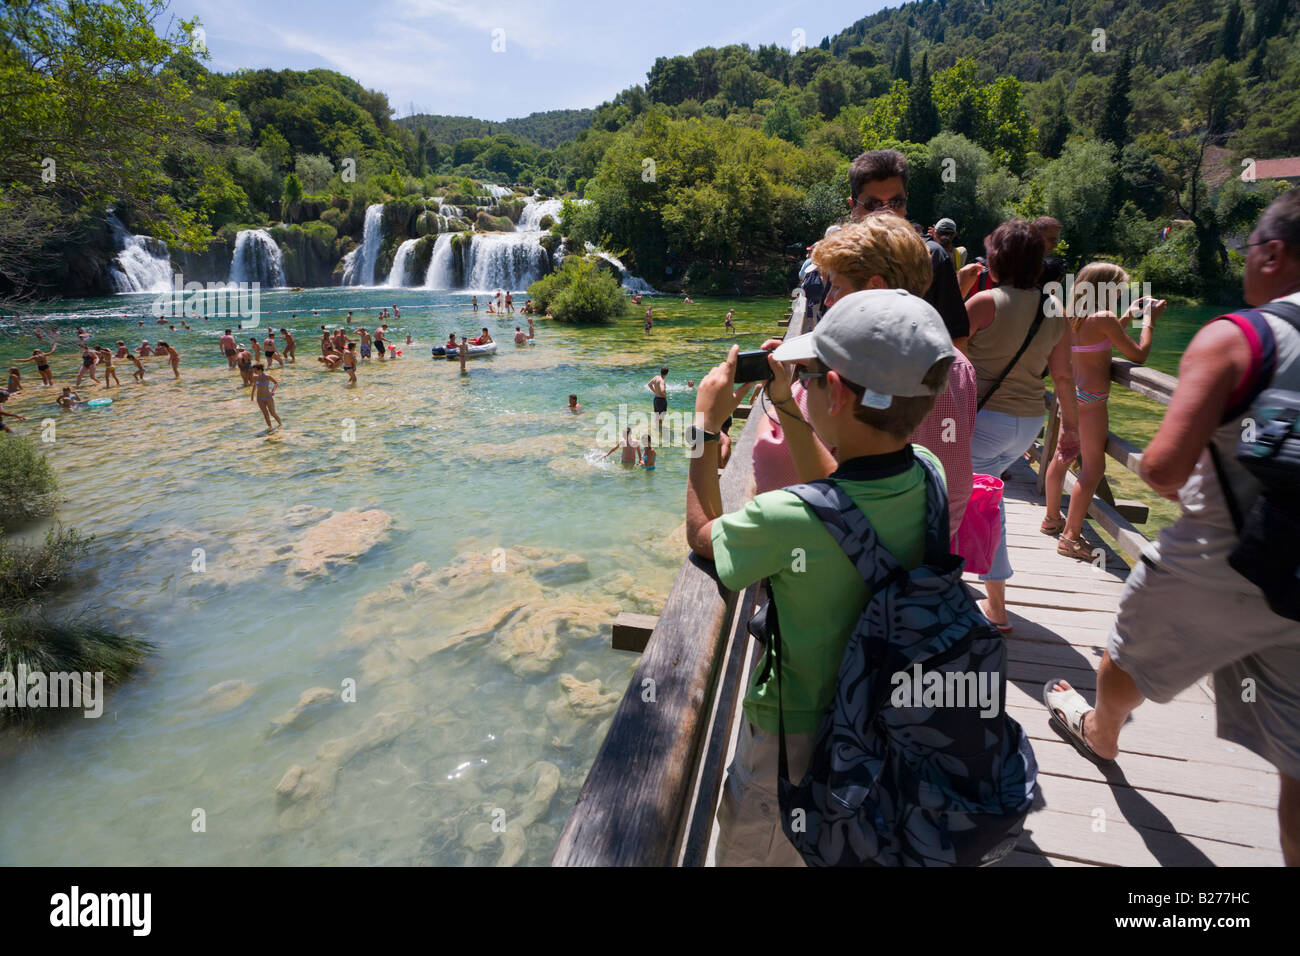 Krka waterfalls, Skradinski buk lower falls, Croatia, Europe, bathing is allowed in restricted area Stock Photo